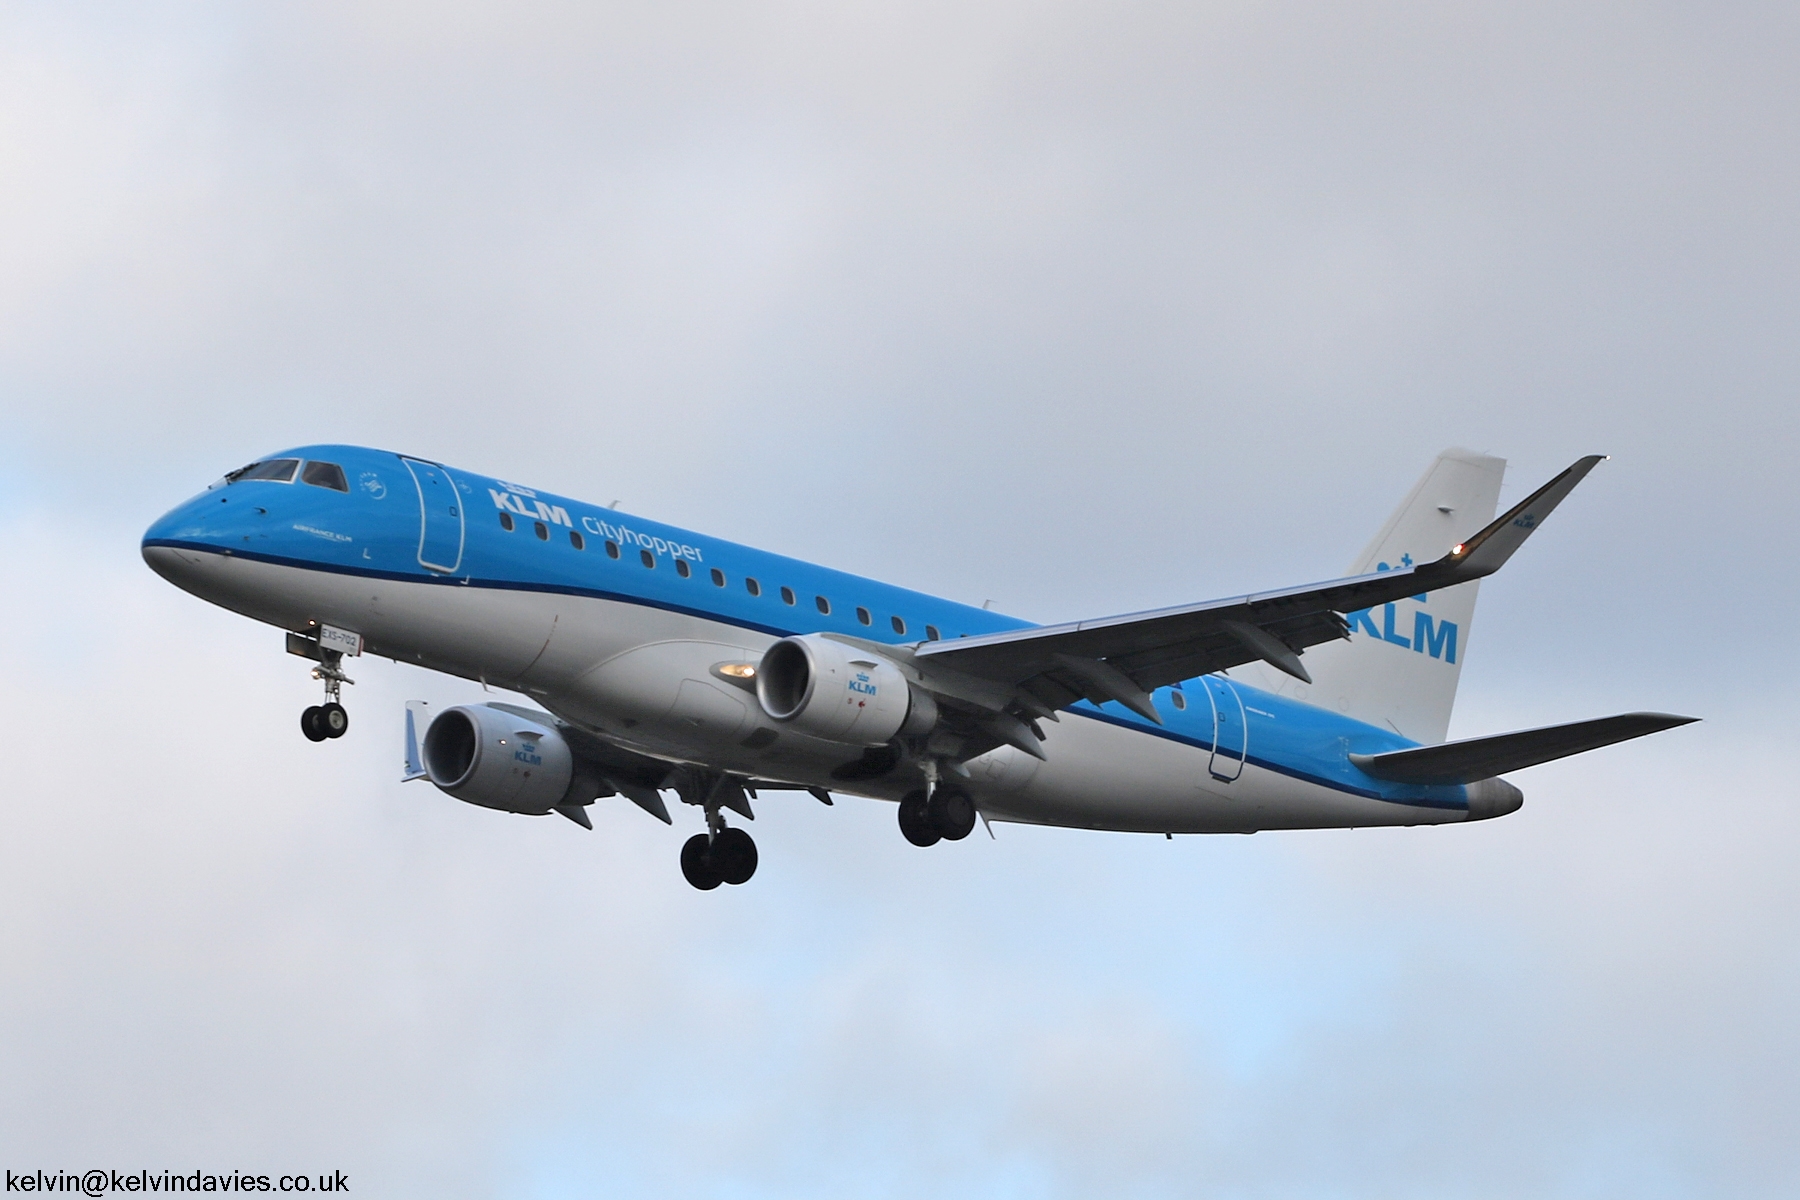 KLM Cityhopper Emb-175 PH-EXS